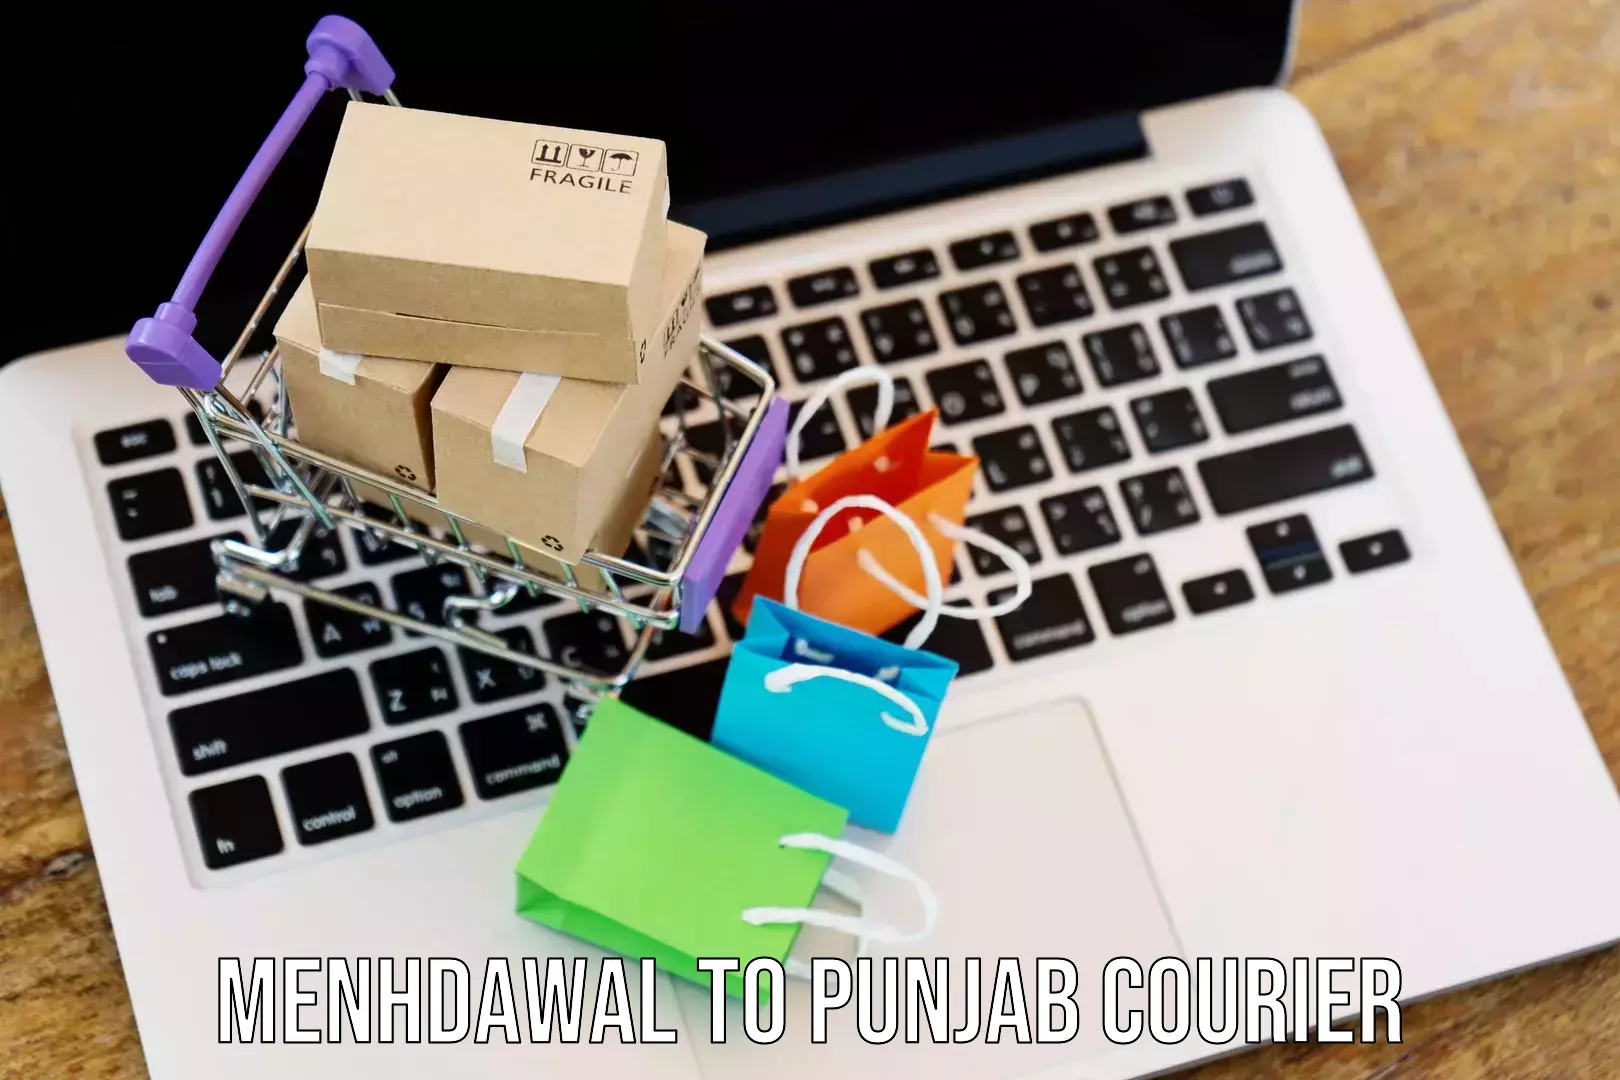 Punctual parcel services Menhdawal to Punjab